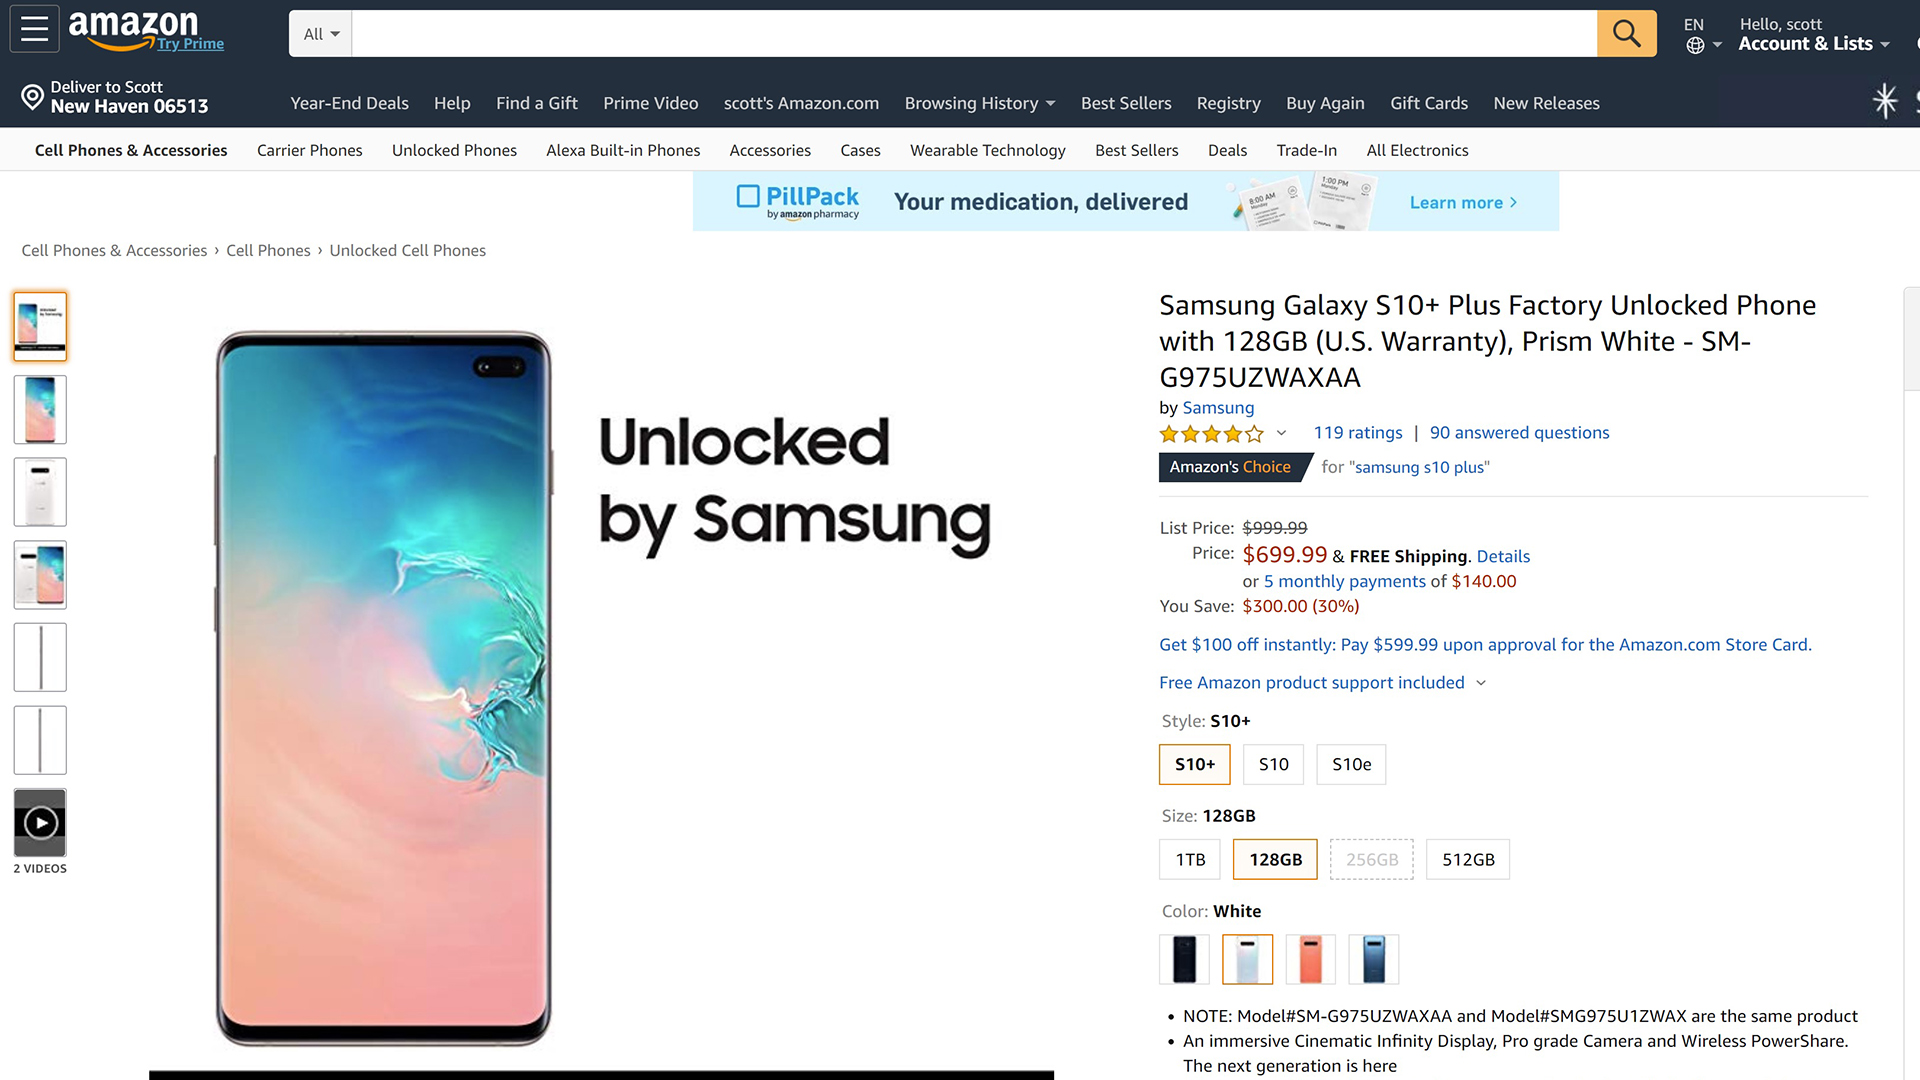 Samsung Galaxy S10 Plus Amazon Deal December 2019